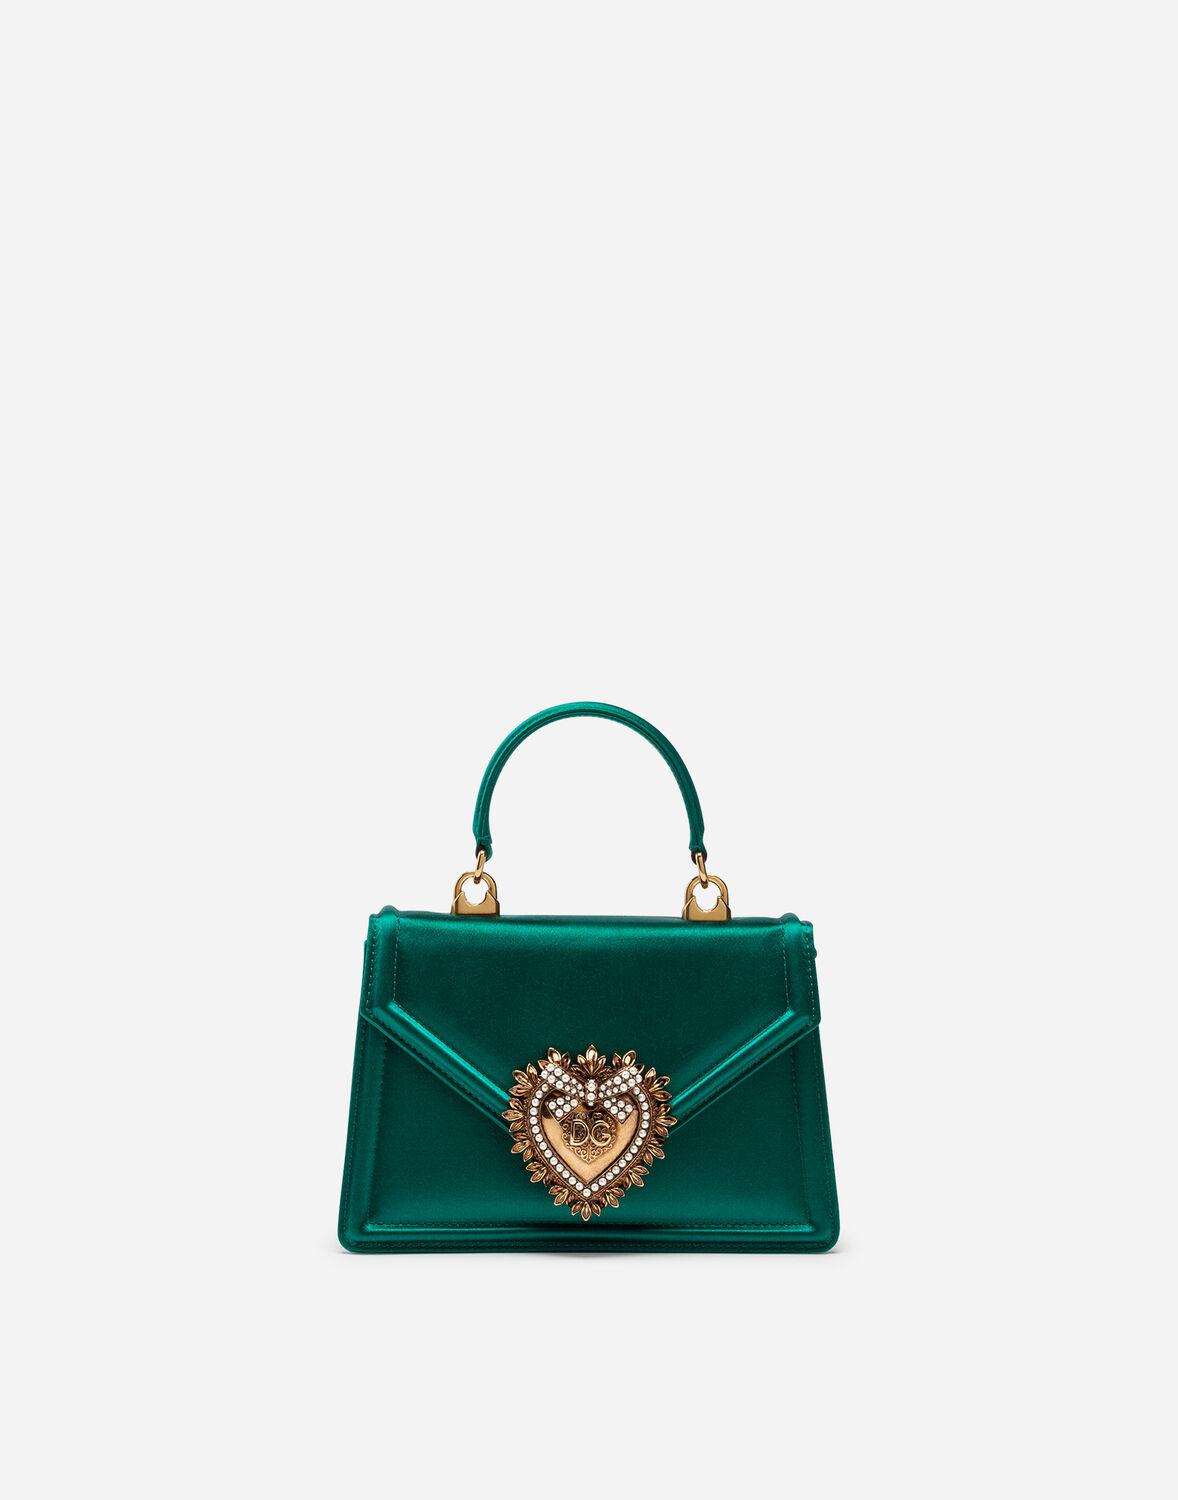 Dolce & Gabbana Small Satin Devotion Bag in Green | Lyst